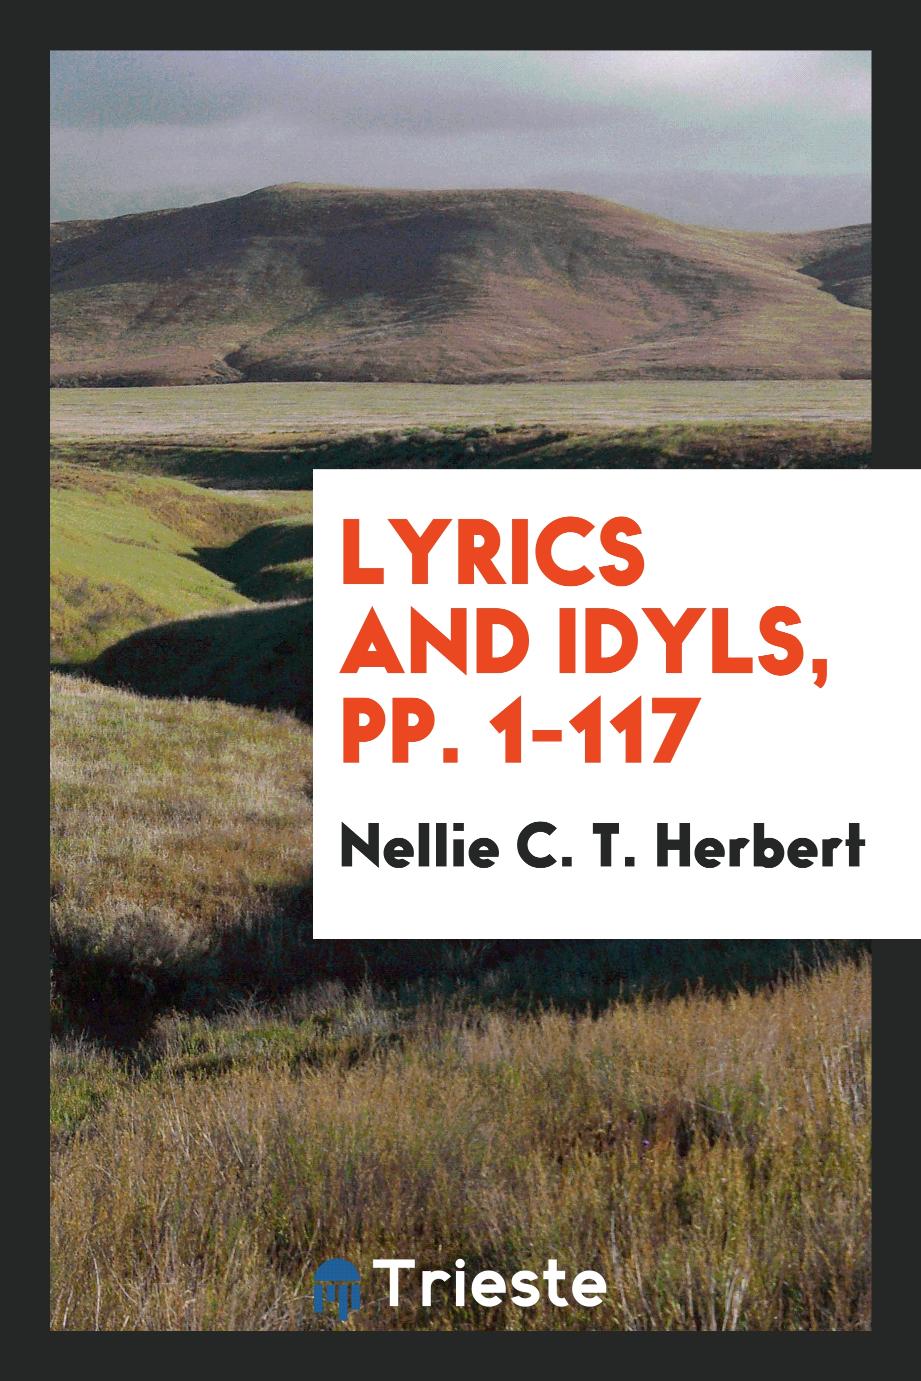 Lyrics and Idyls, pp. 1-117